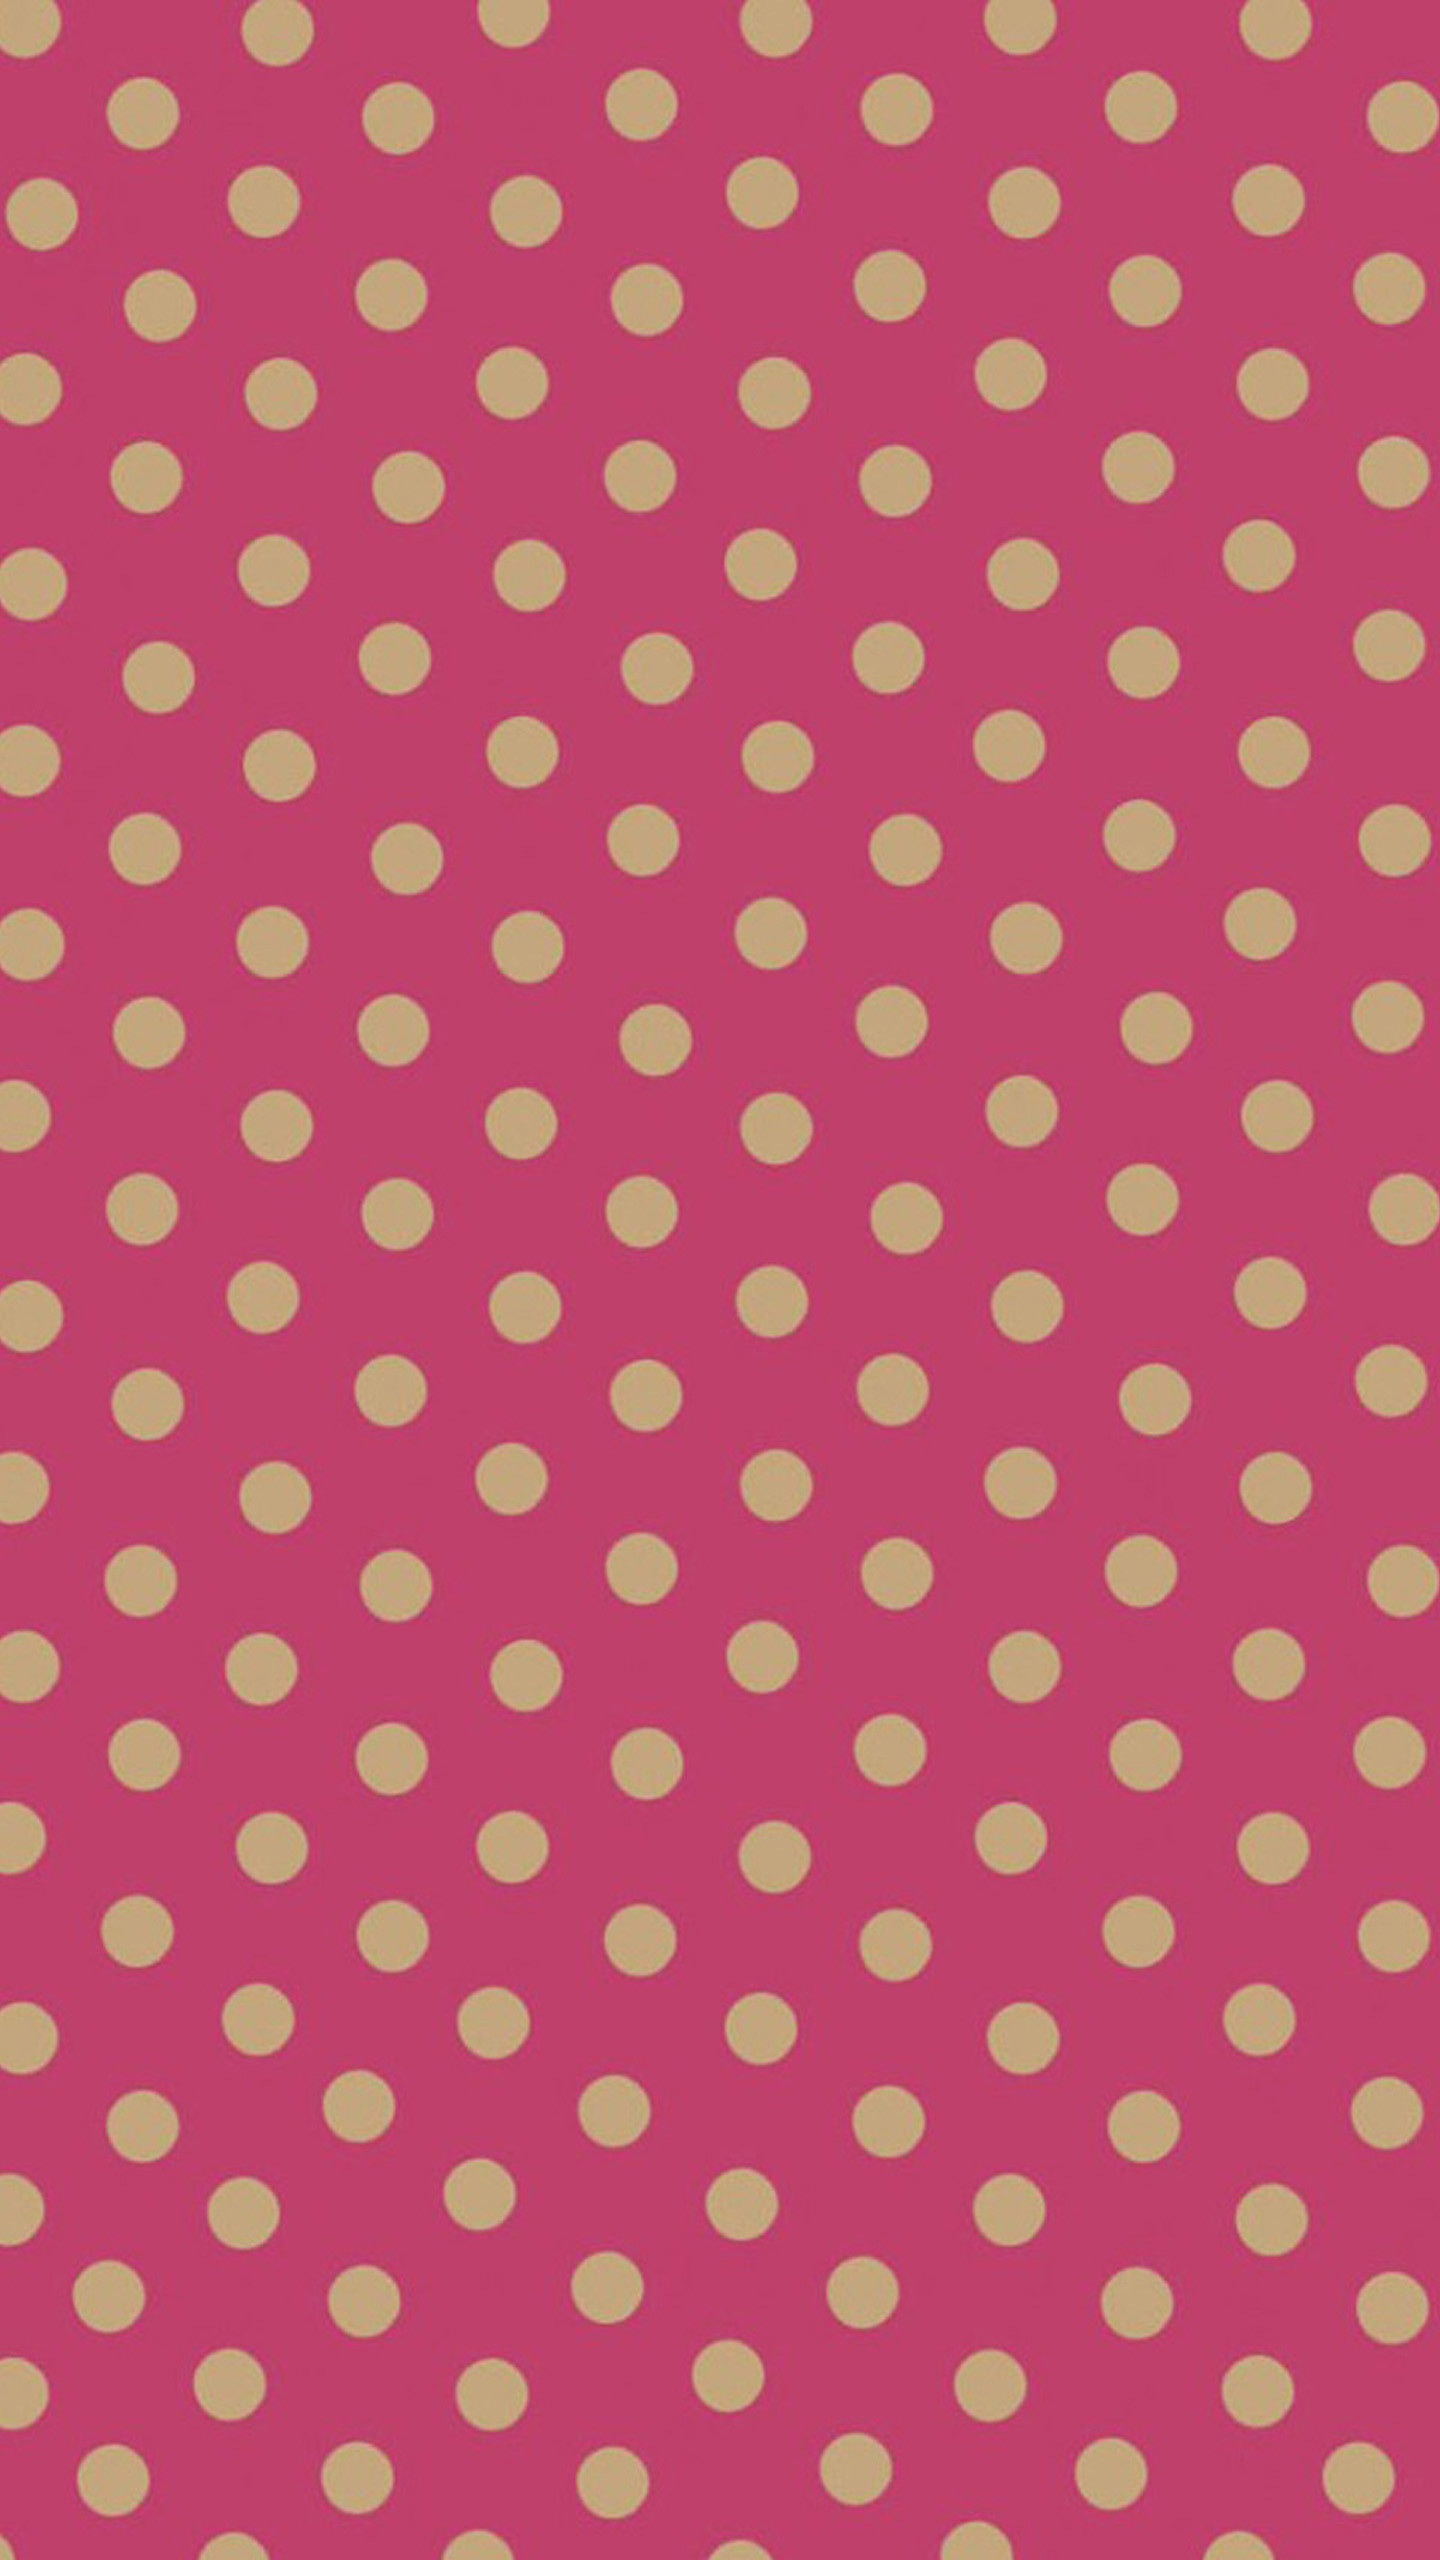 Polka Dot pattern Galaxy Note 4 Wallpapers